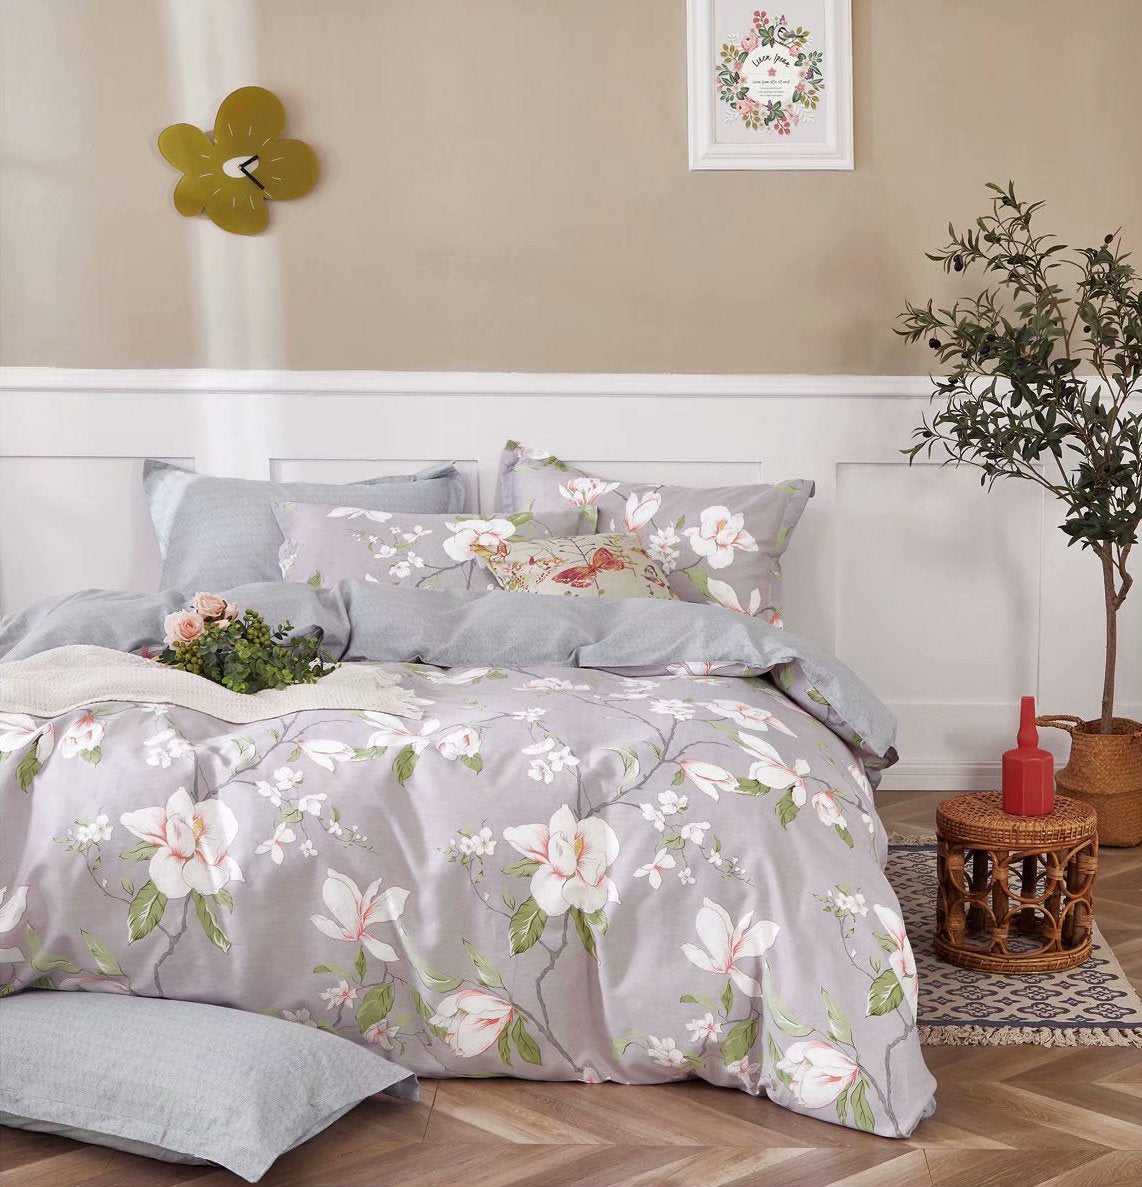 Magnolia 100% Cotton Bedding Set: Duvet Cover + Pillow Shams (or + Both Pillow Shams and Pillowcases)